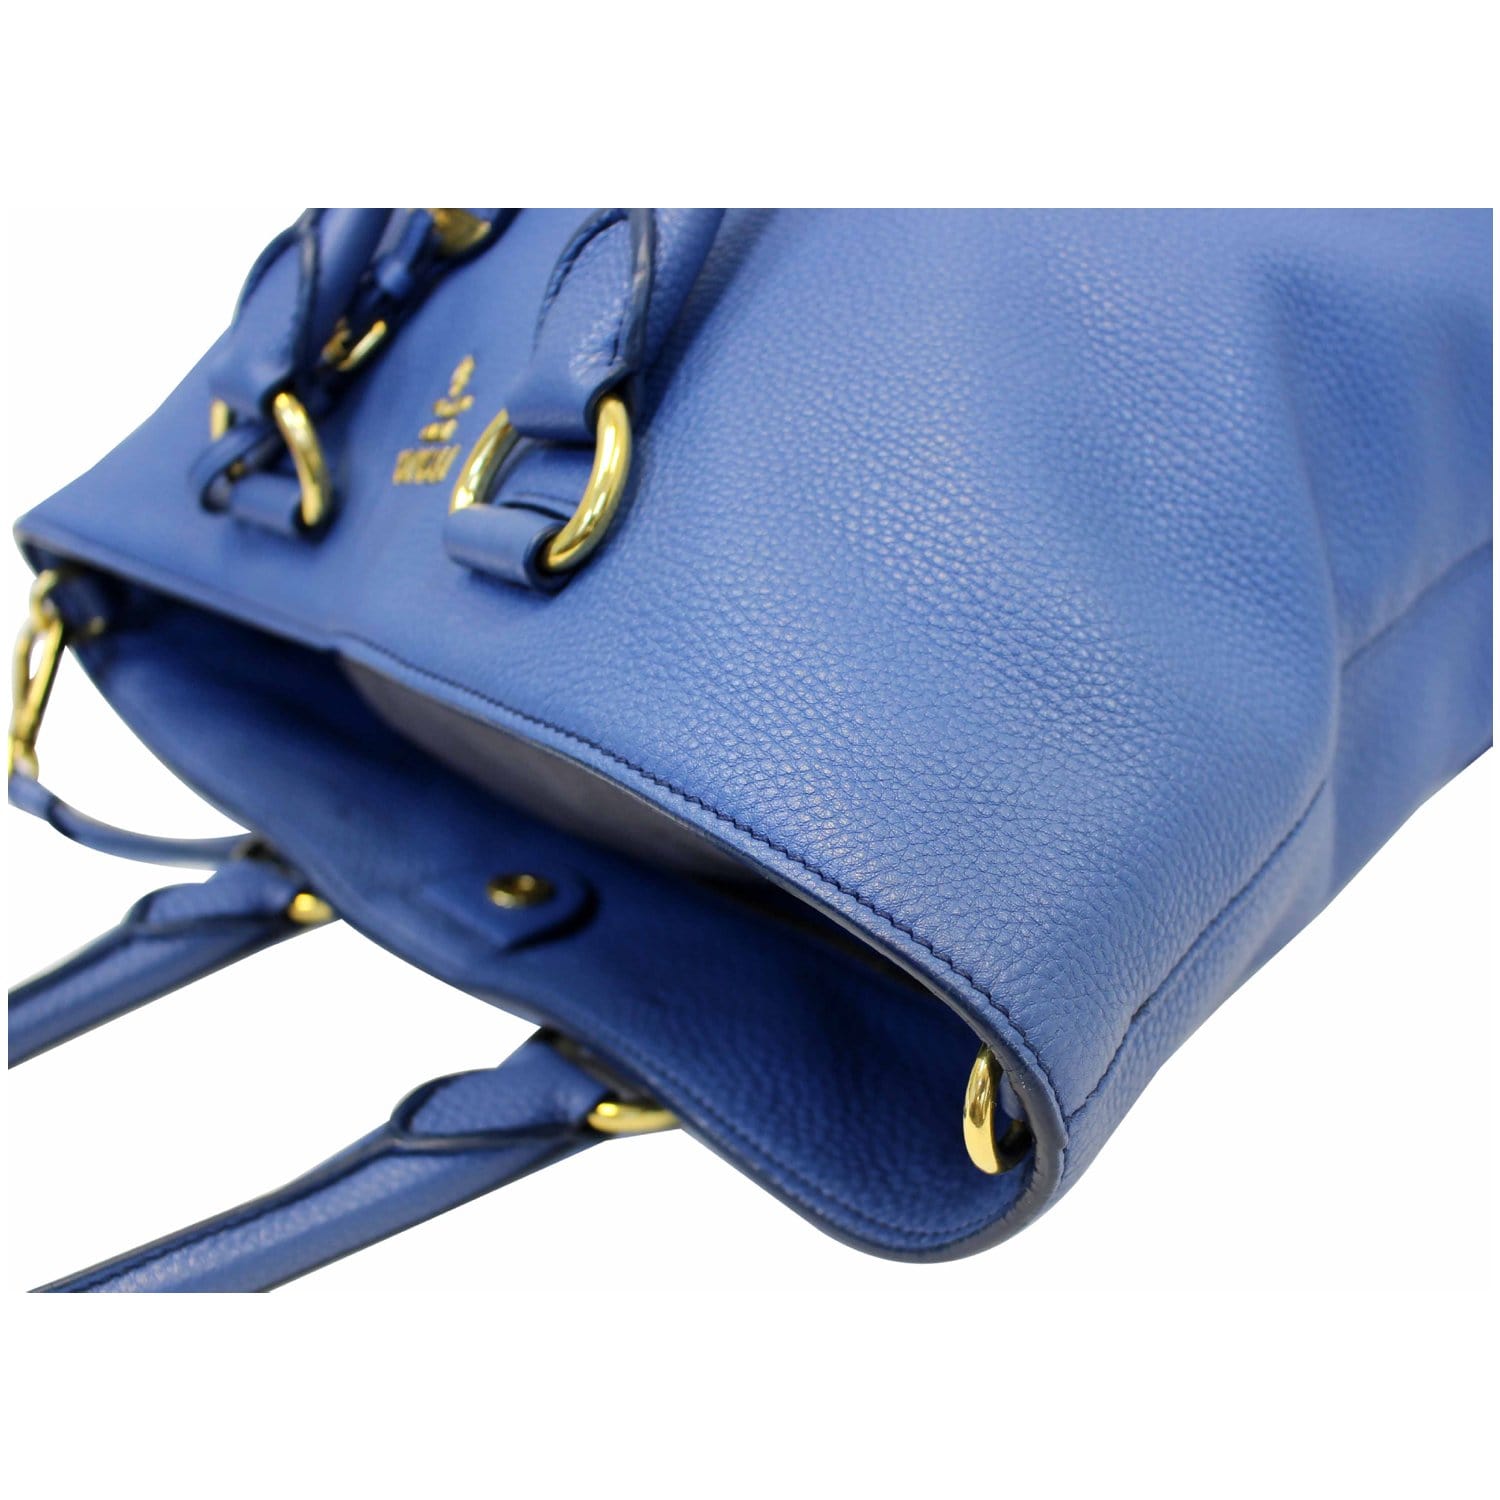 Prada - Vitello Dark Blue Grain Leather Satchel Bag